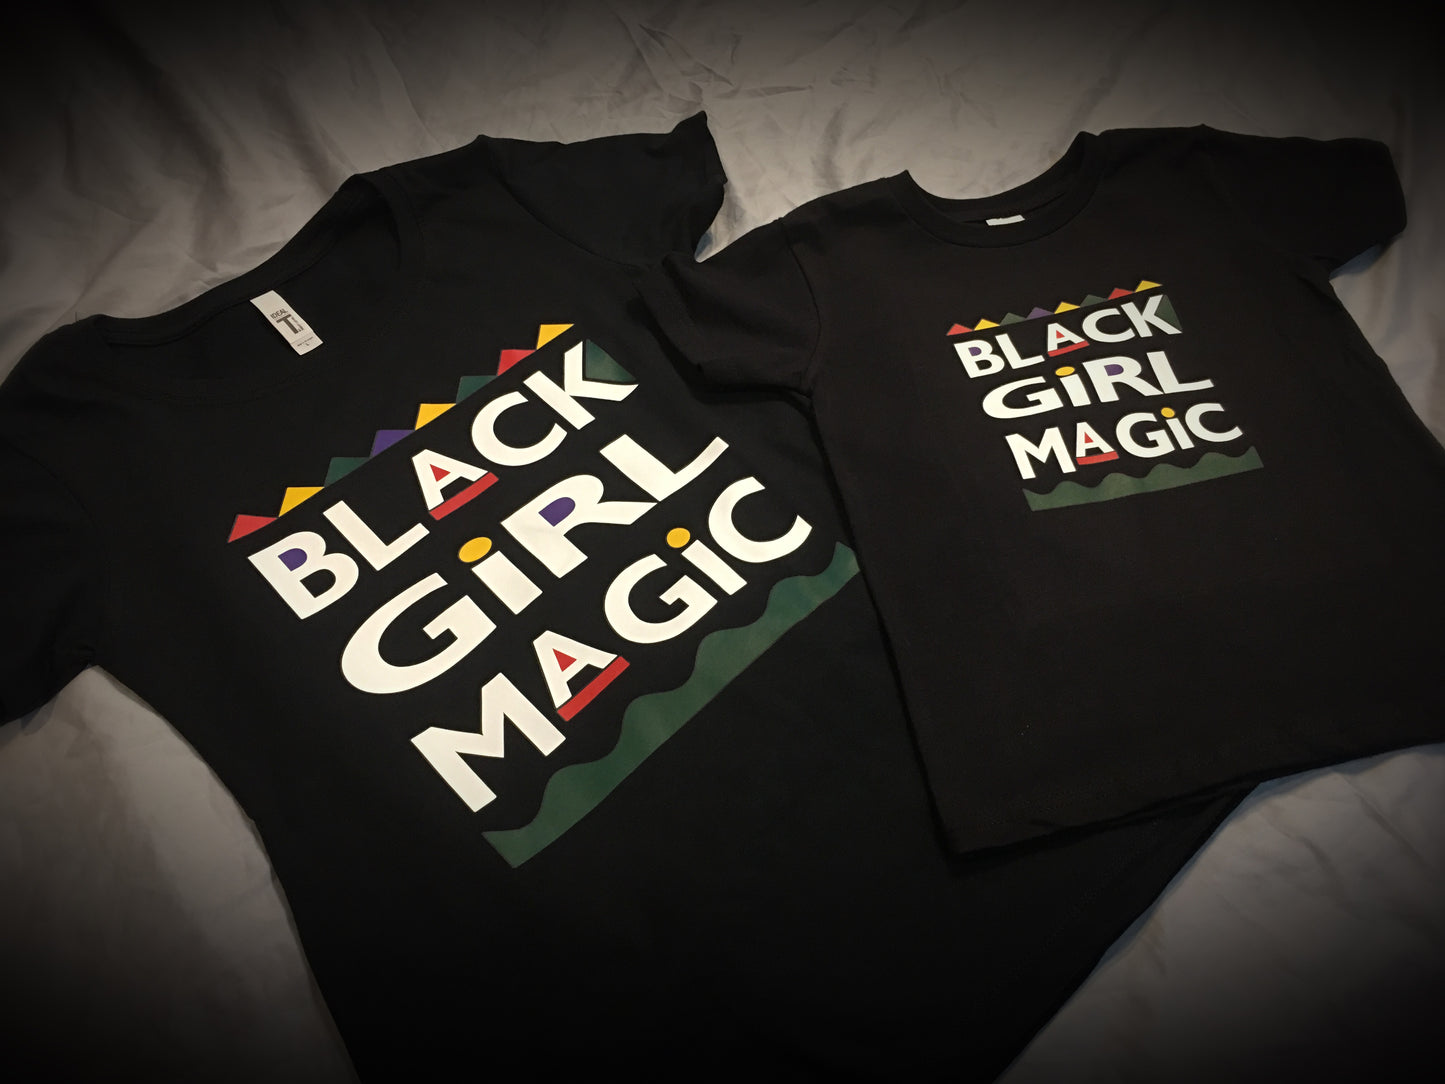 BLM - Black Girl Magic 90's Edition Shirt